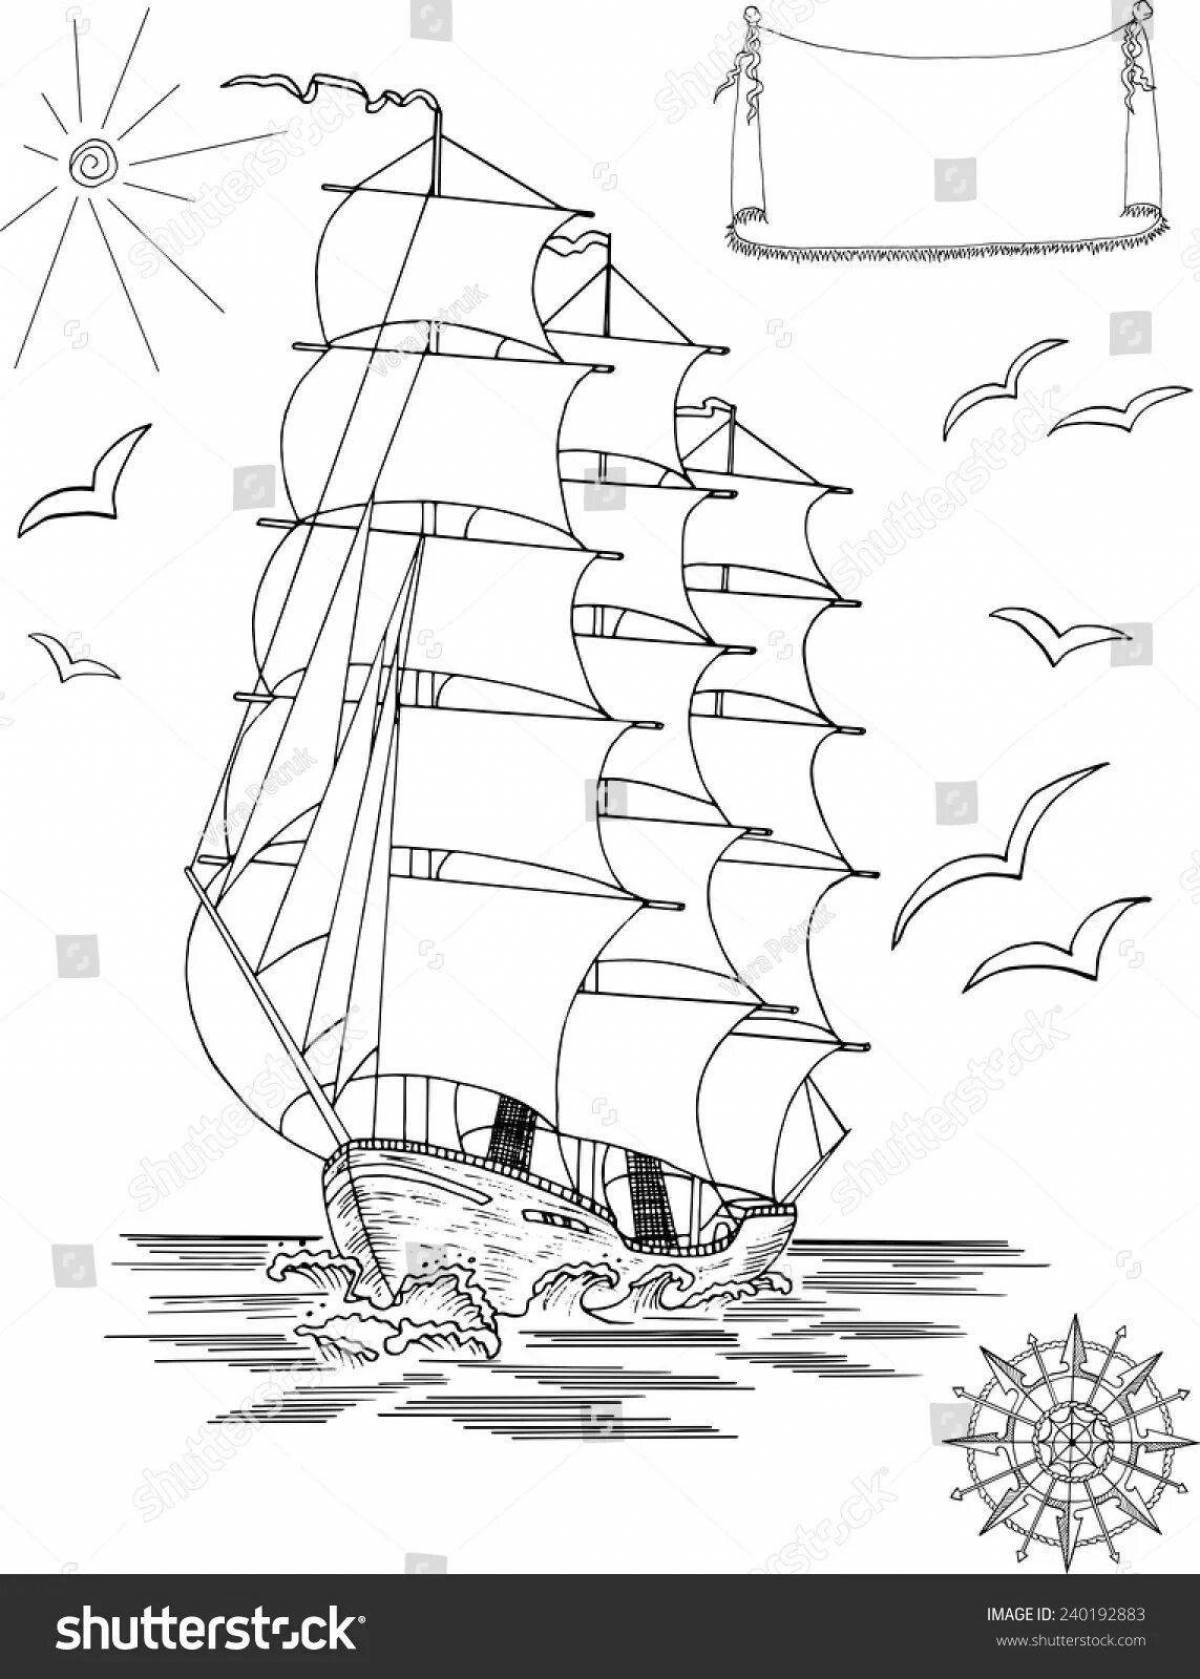 Charming scarlet sails grade 6 coloring book